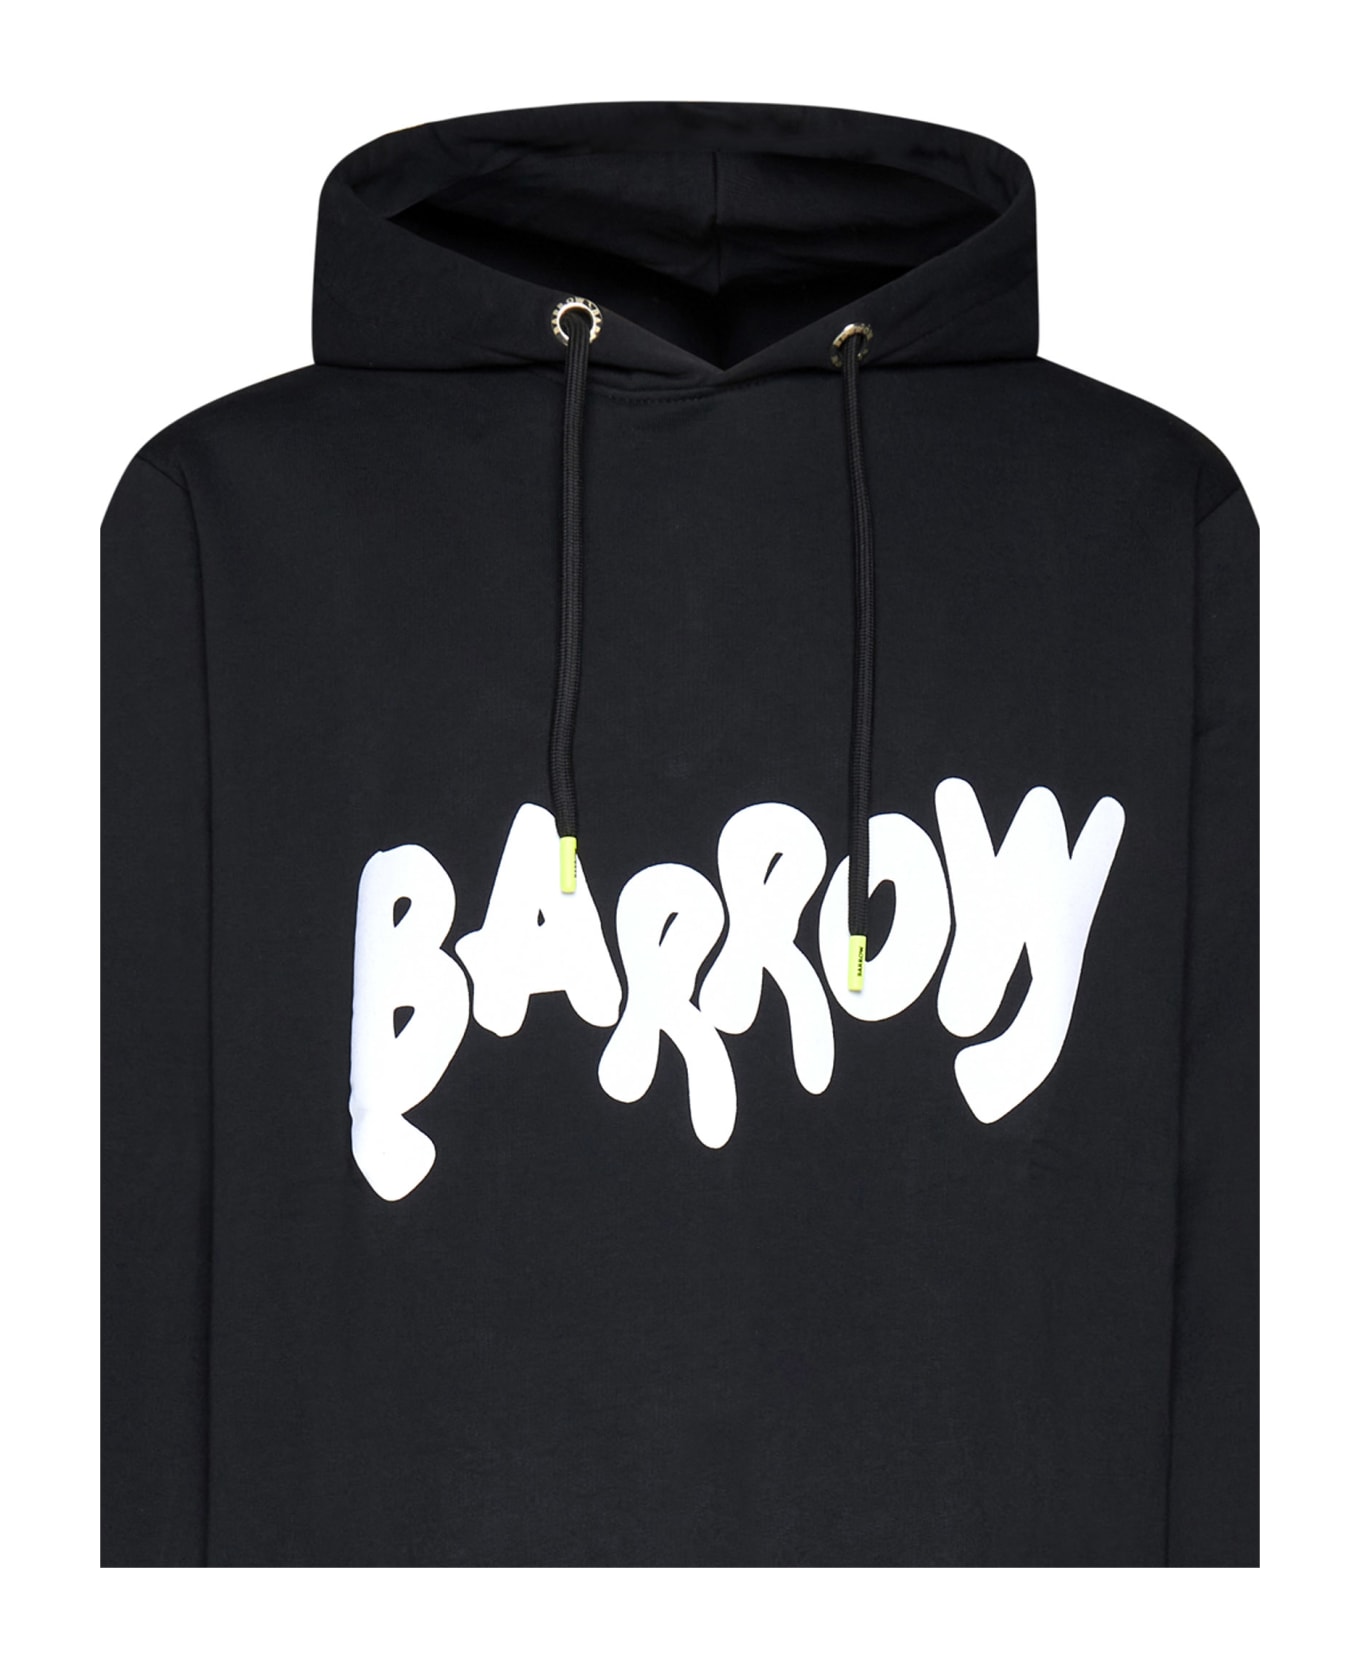 Barrow Black Hoodie With Contrast Lettering Logo - Black